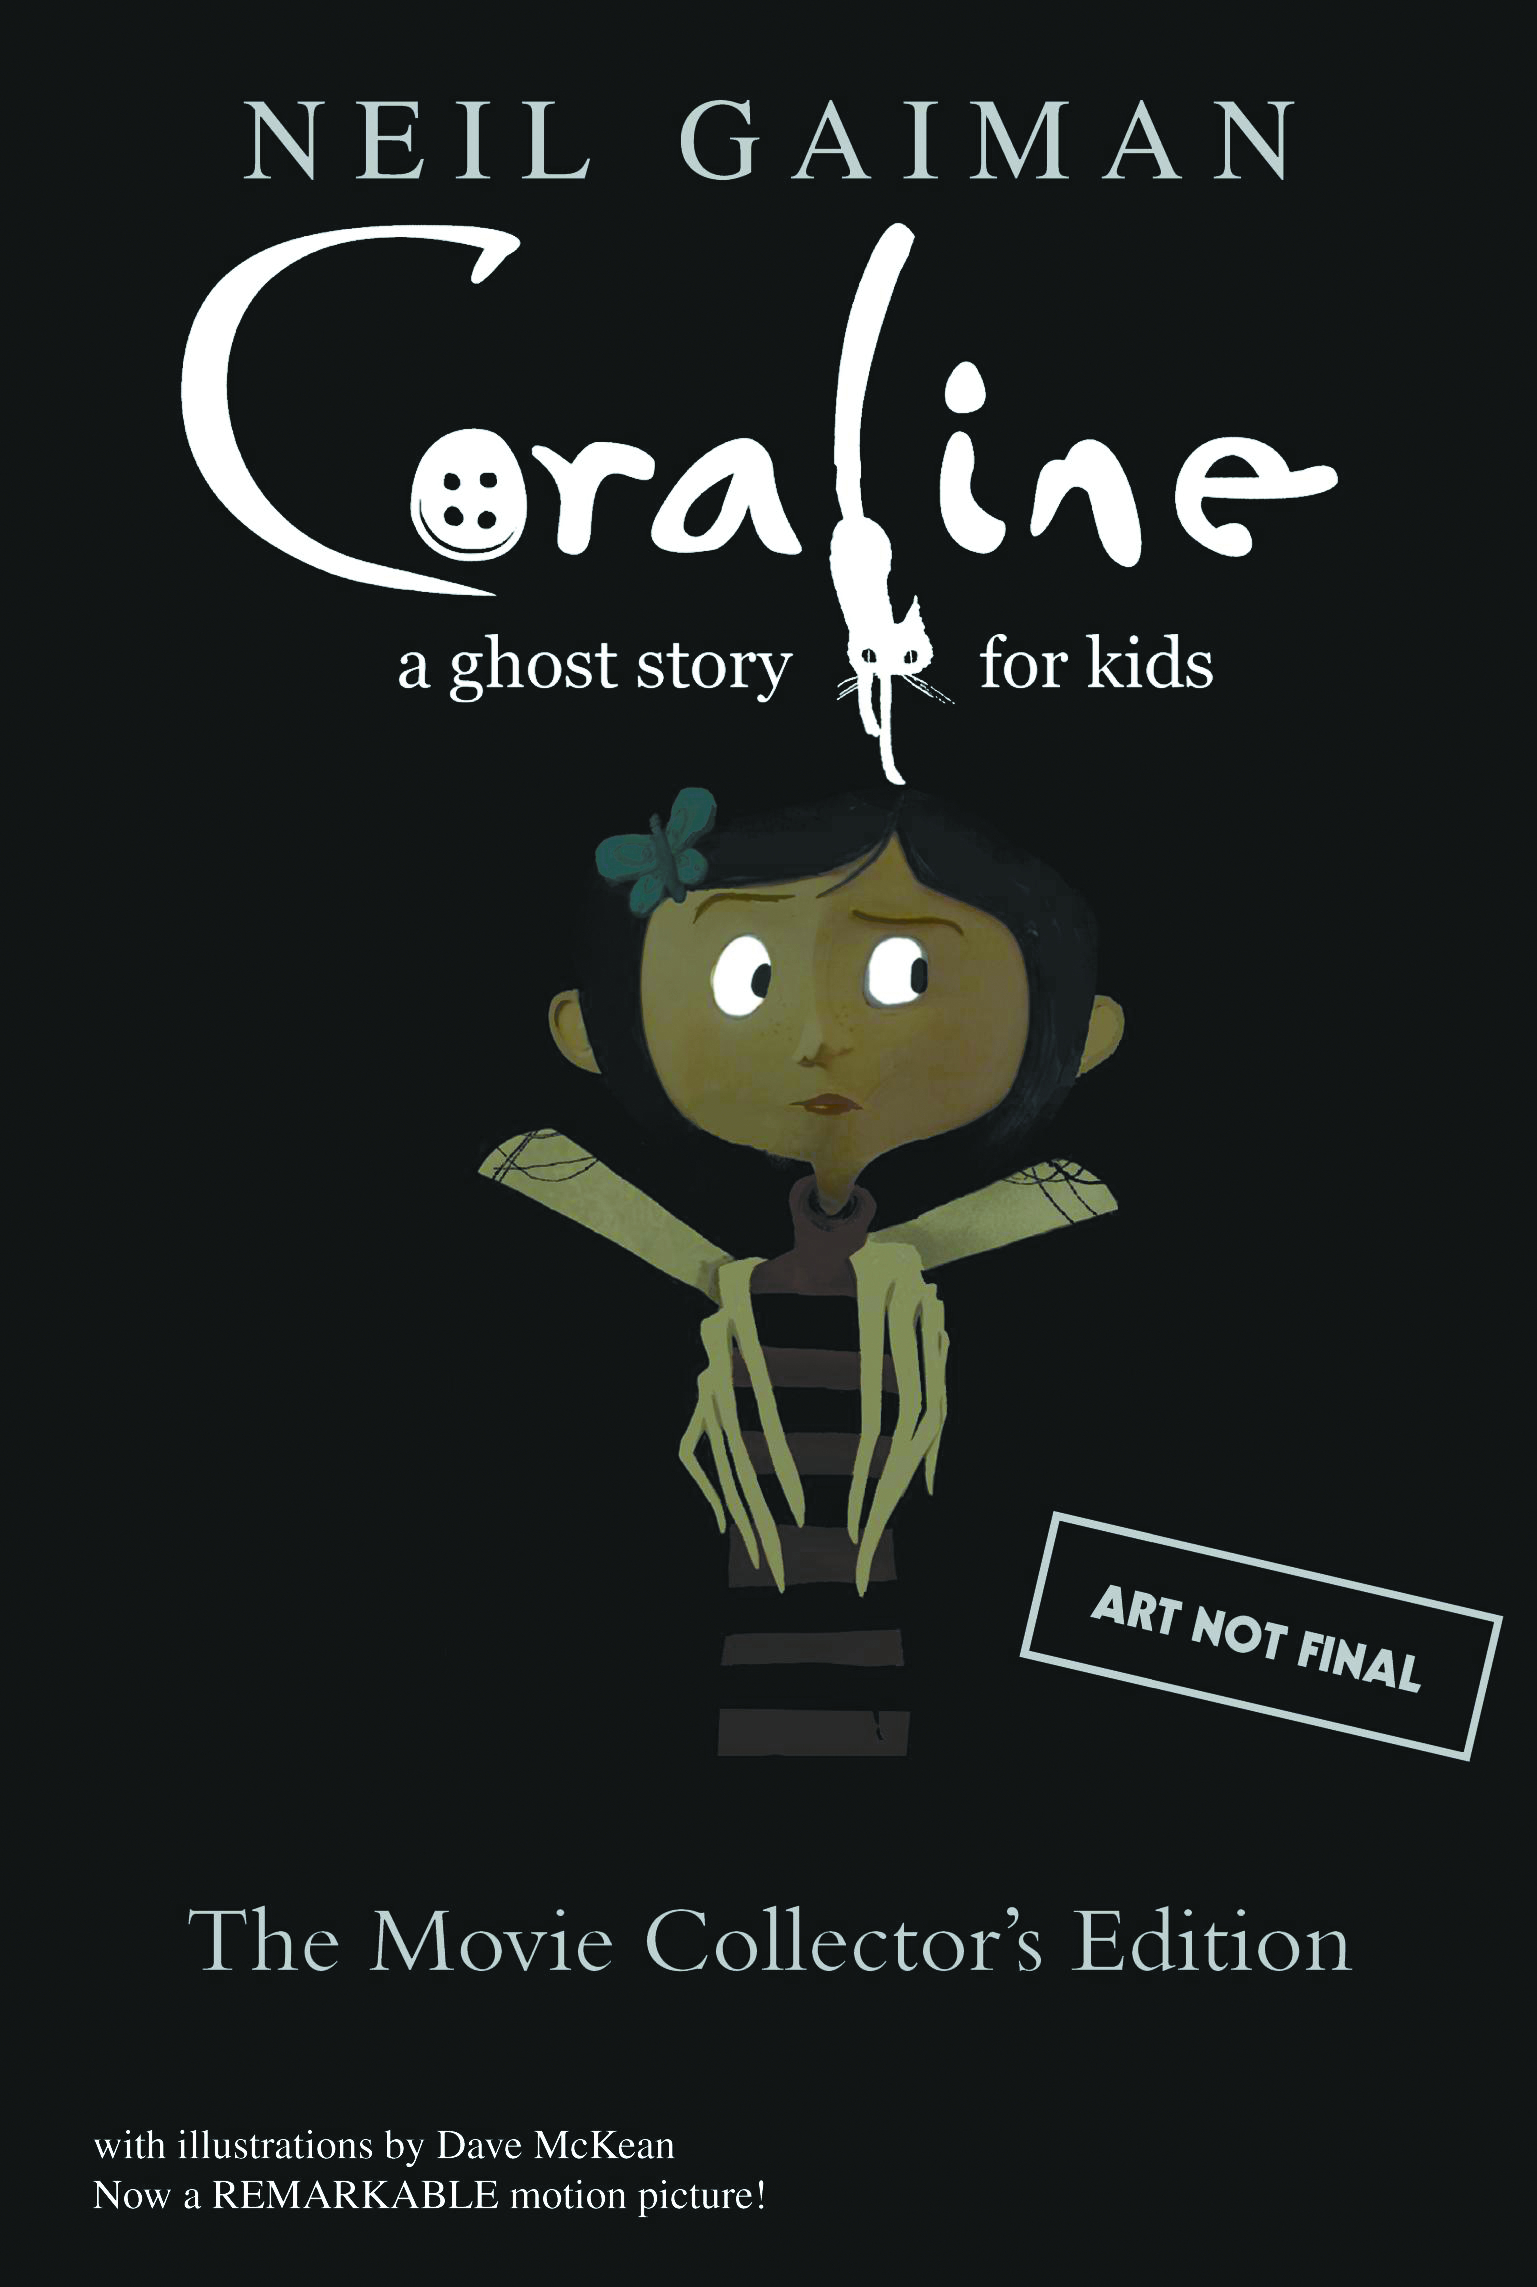 Coraline : Gaiman, Neil, McKean, Dave: : Books